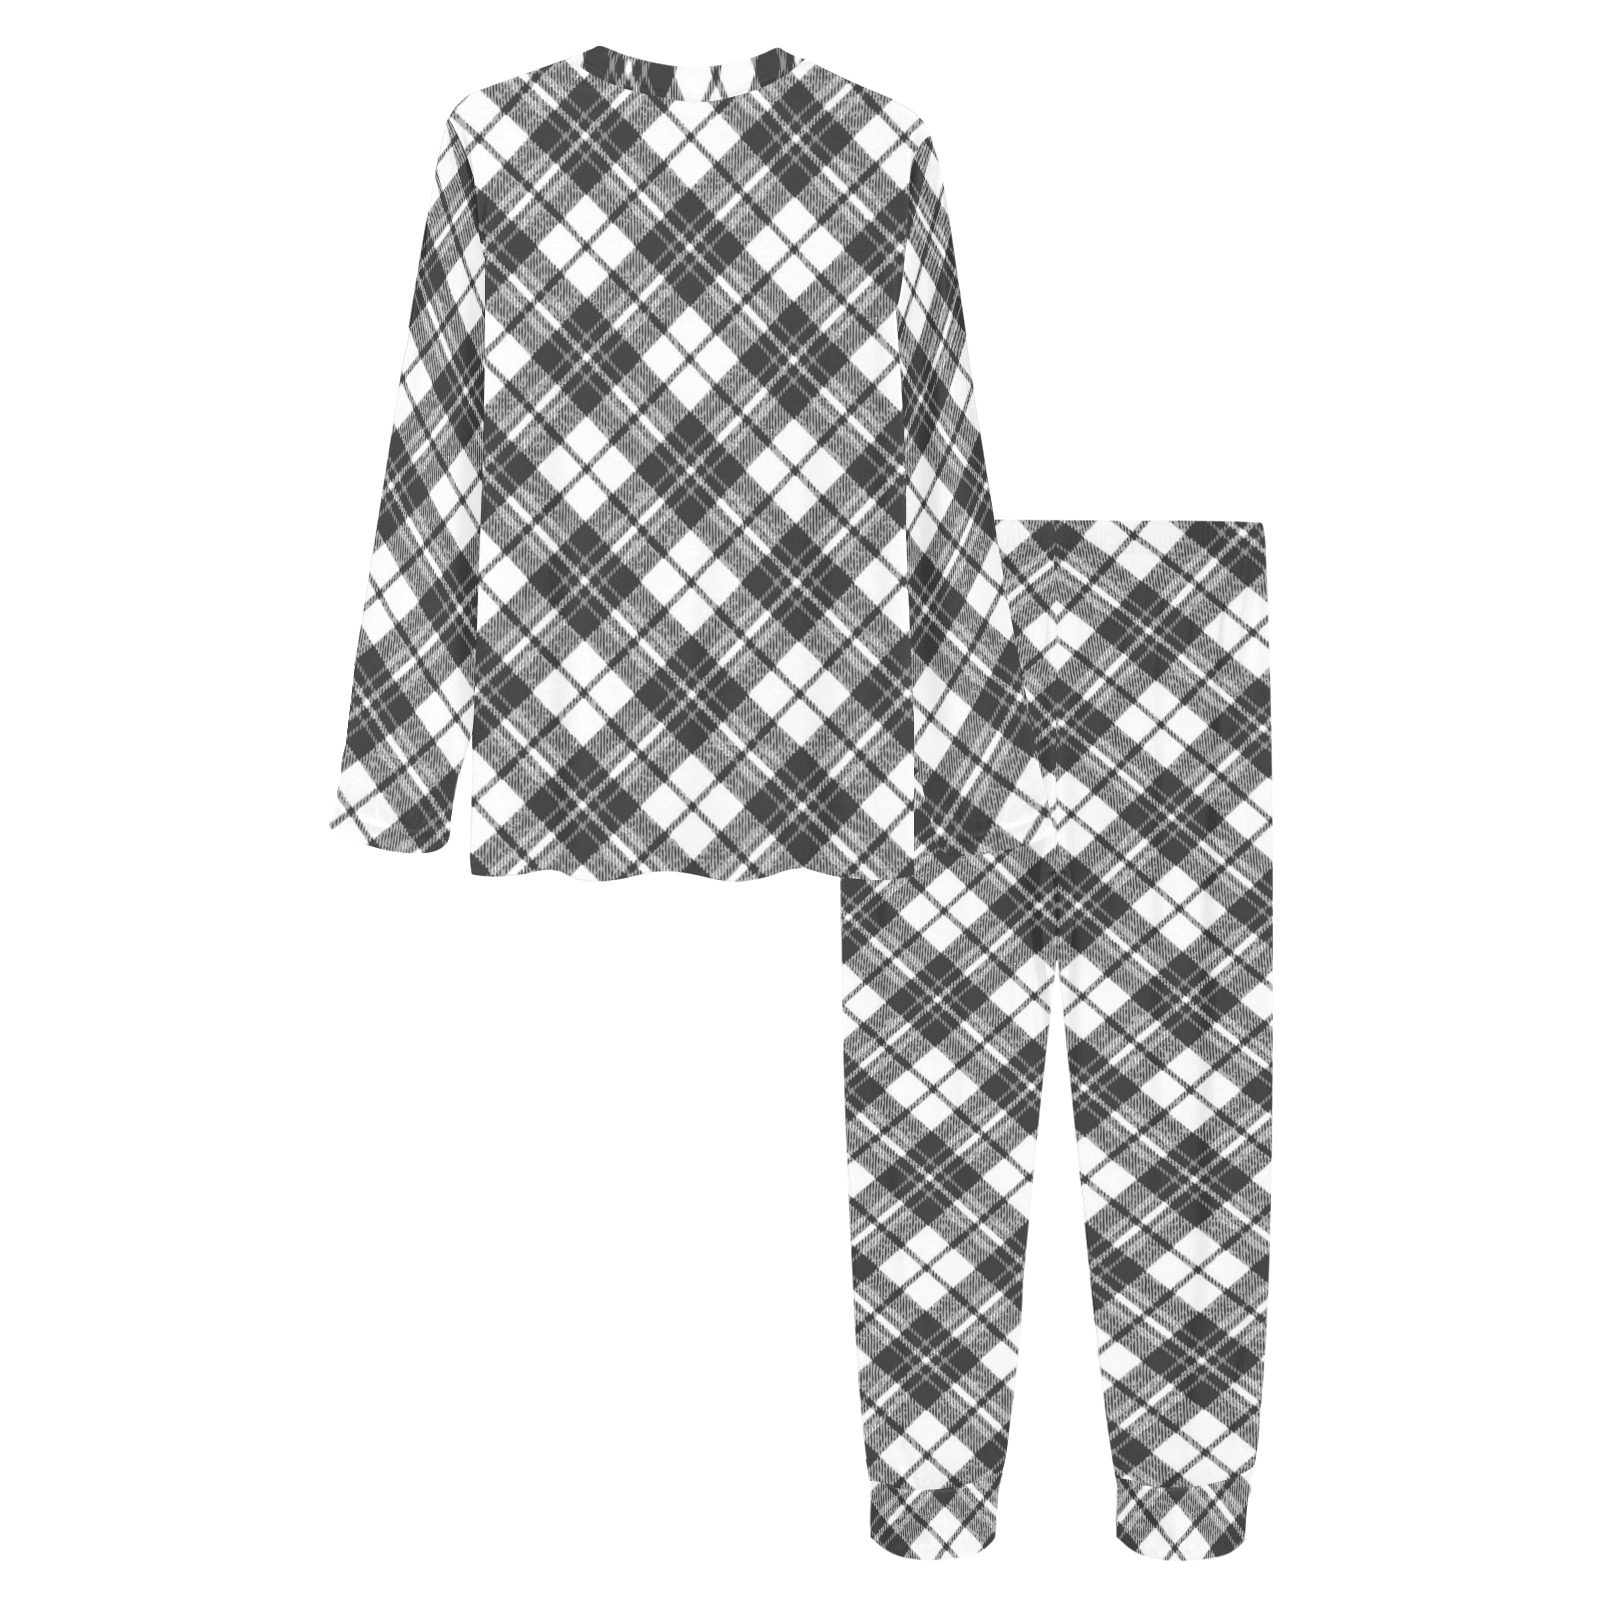 Tartan black white pattern holidays Christmas xmas elegant lines geometric cool fun classic elegance Women's All Over Print Pajama Set